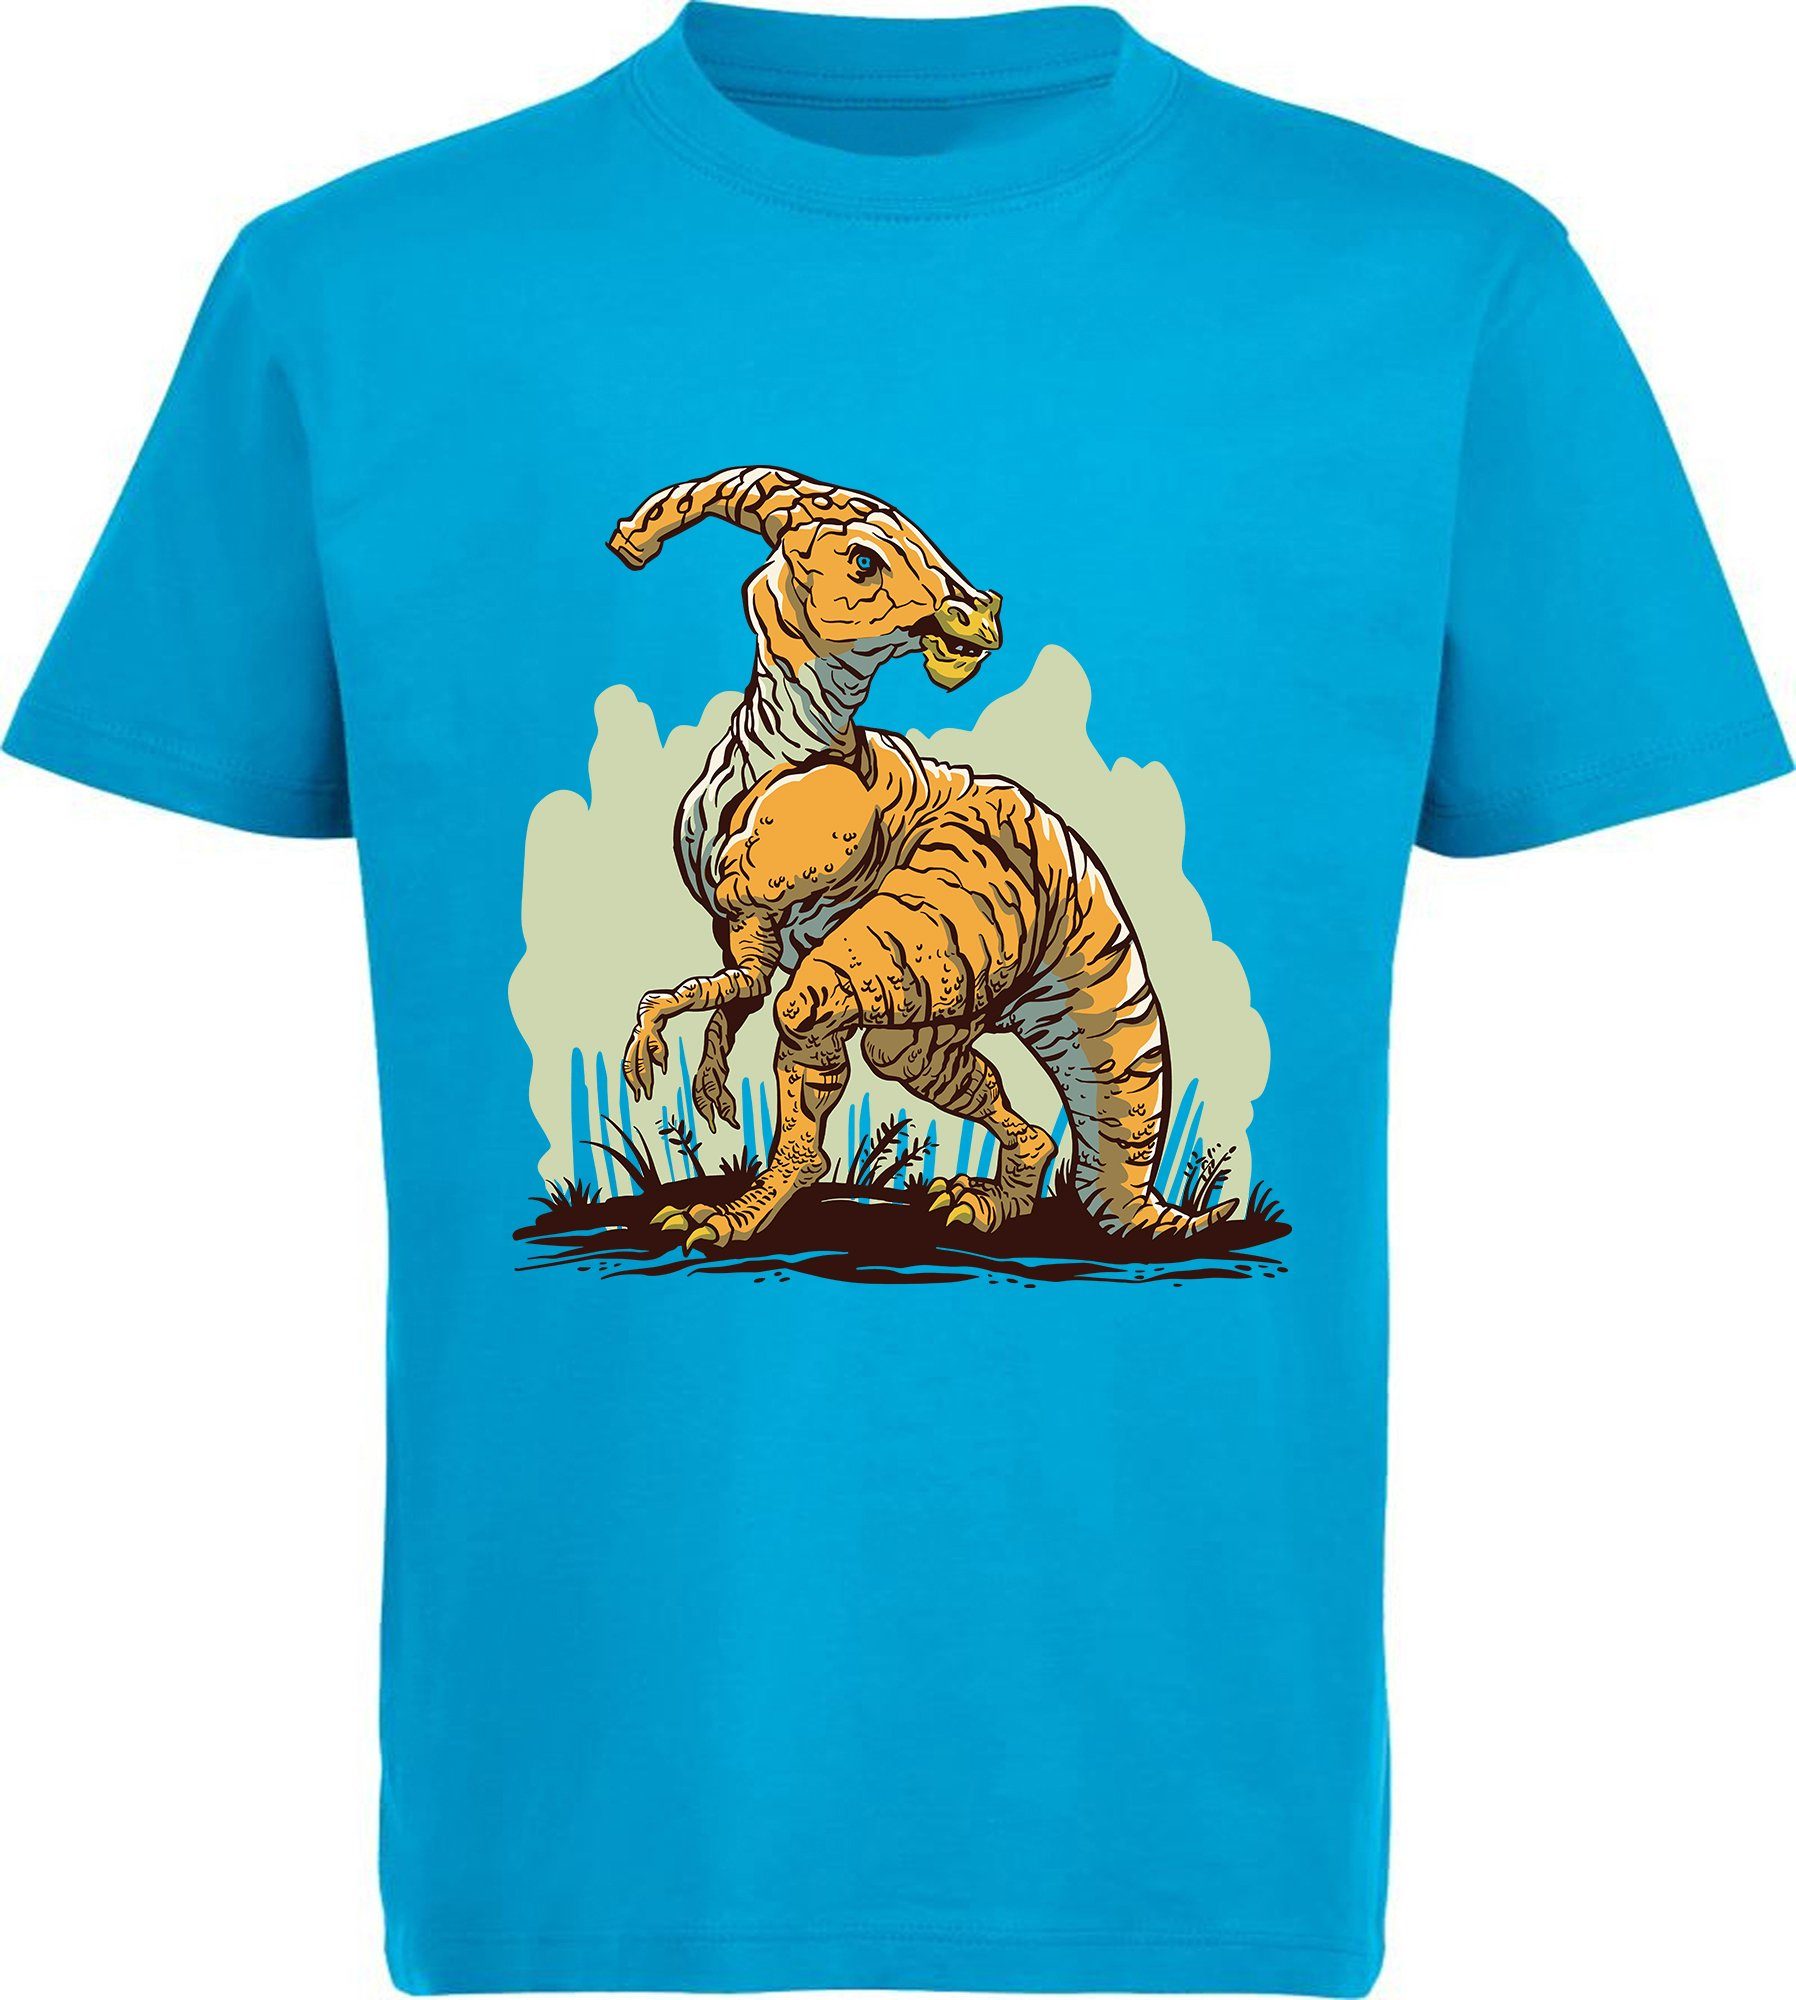 MyDesign24 Print-Shirt bedrucktes Kinder T-Shirt Parasaurolophus Baumwollshirt mit Dino, schwarz, weiß, rot, blau, i99 aqua blau